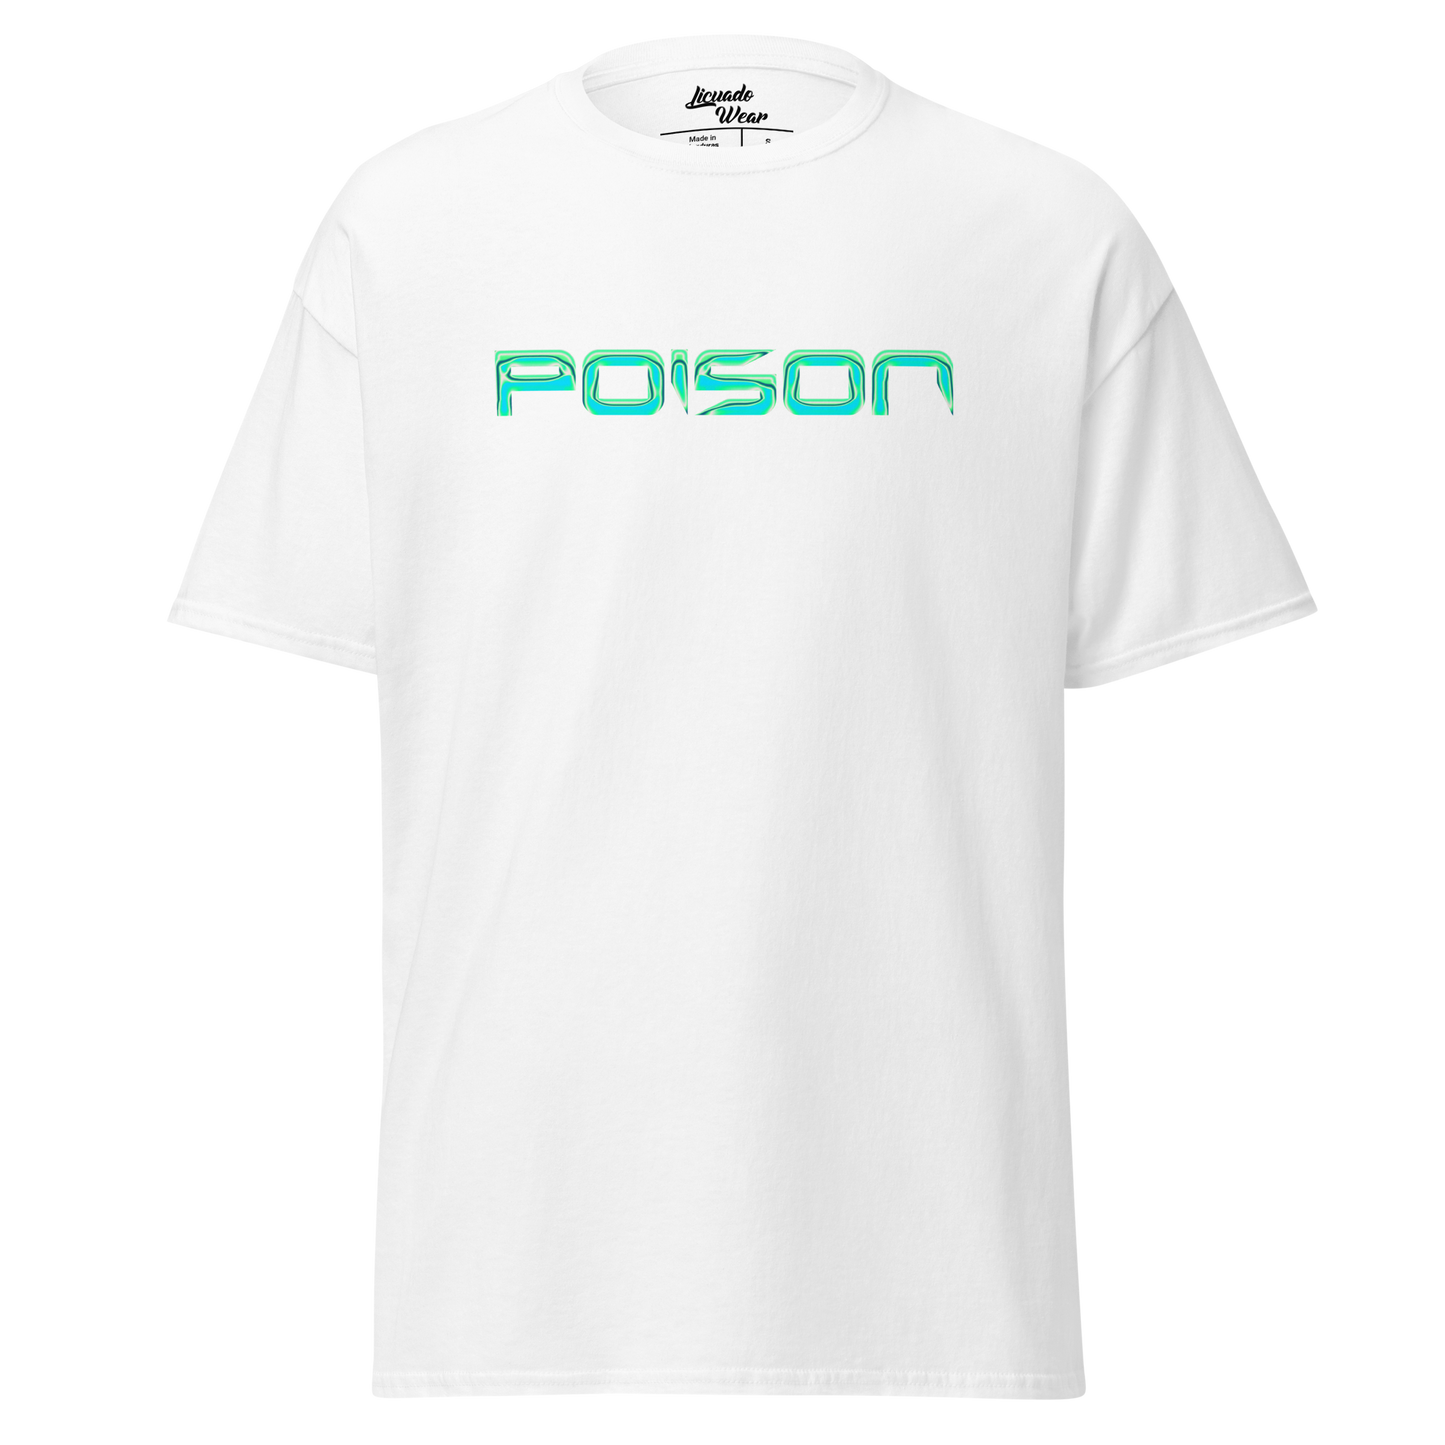 Poison (Green Chrome Escorpión/Scorpion)) - Unisex T-shirt